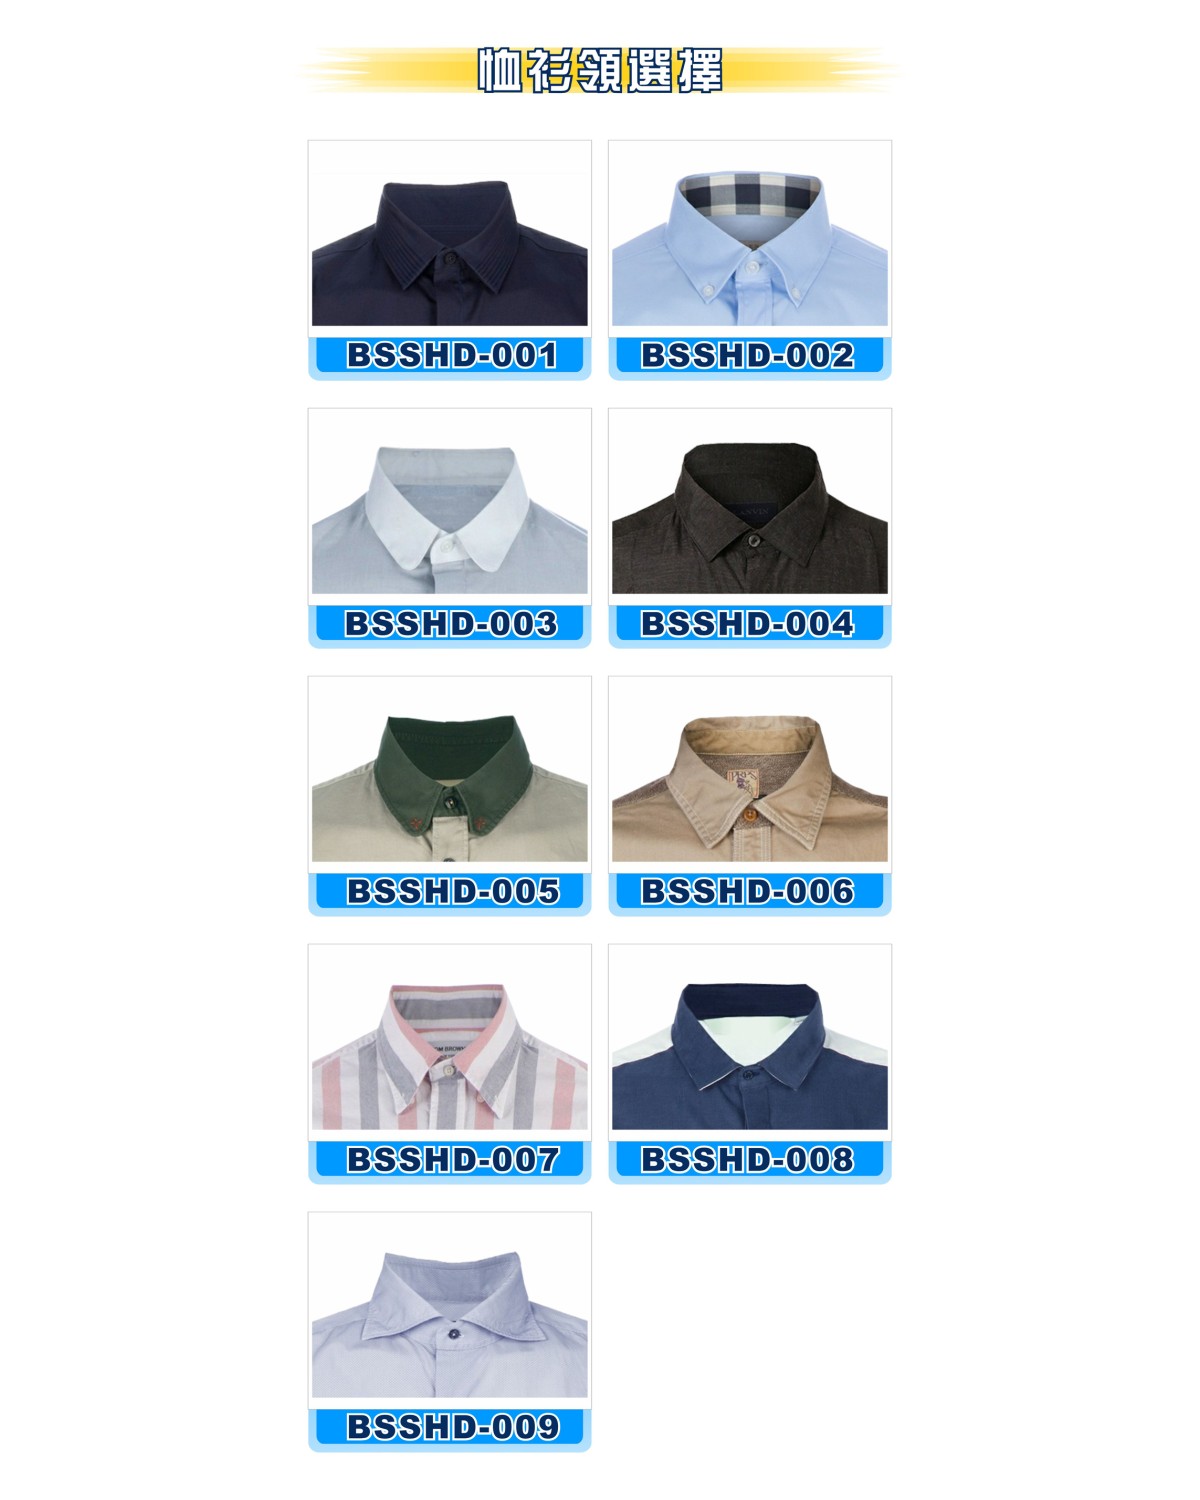 Options for shirt collars